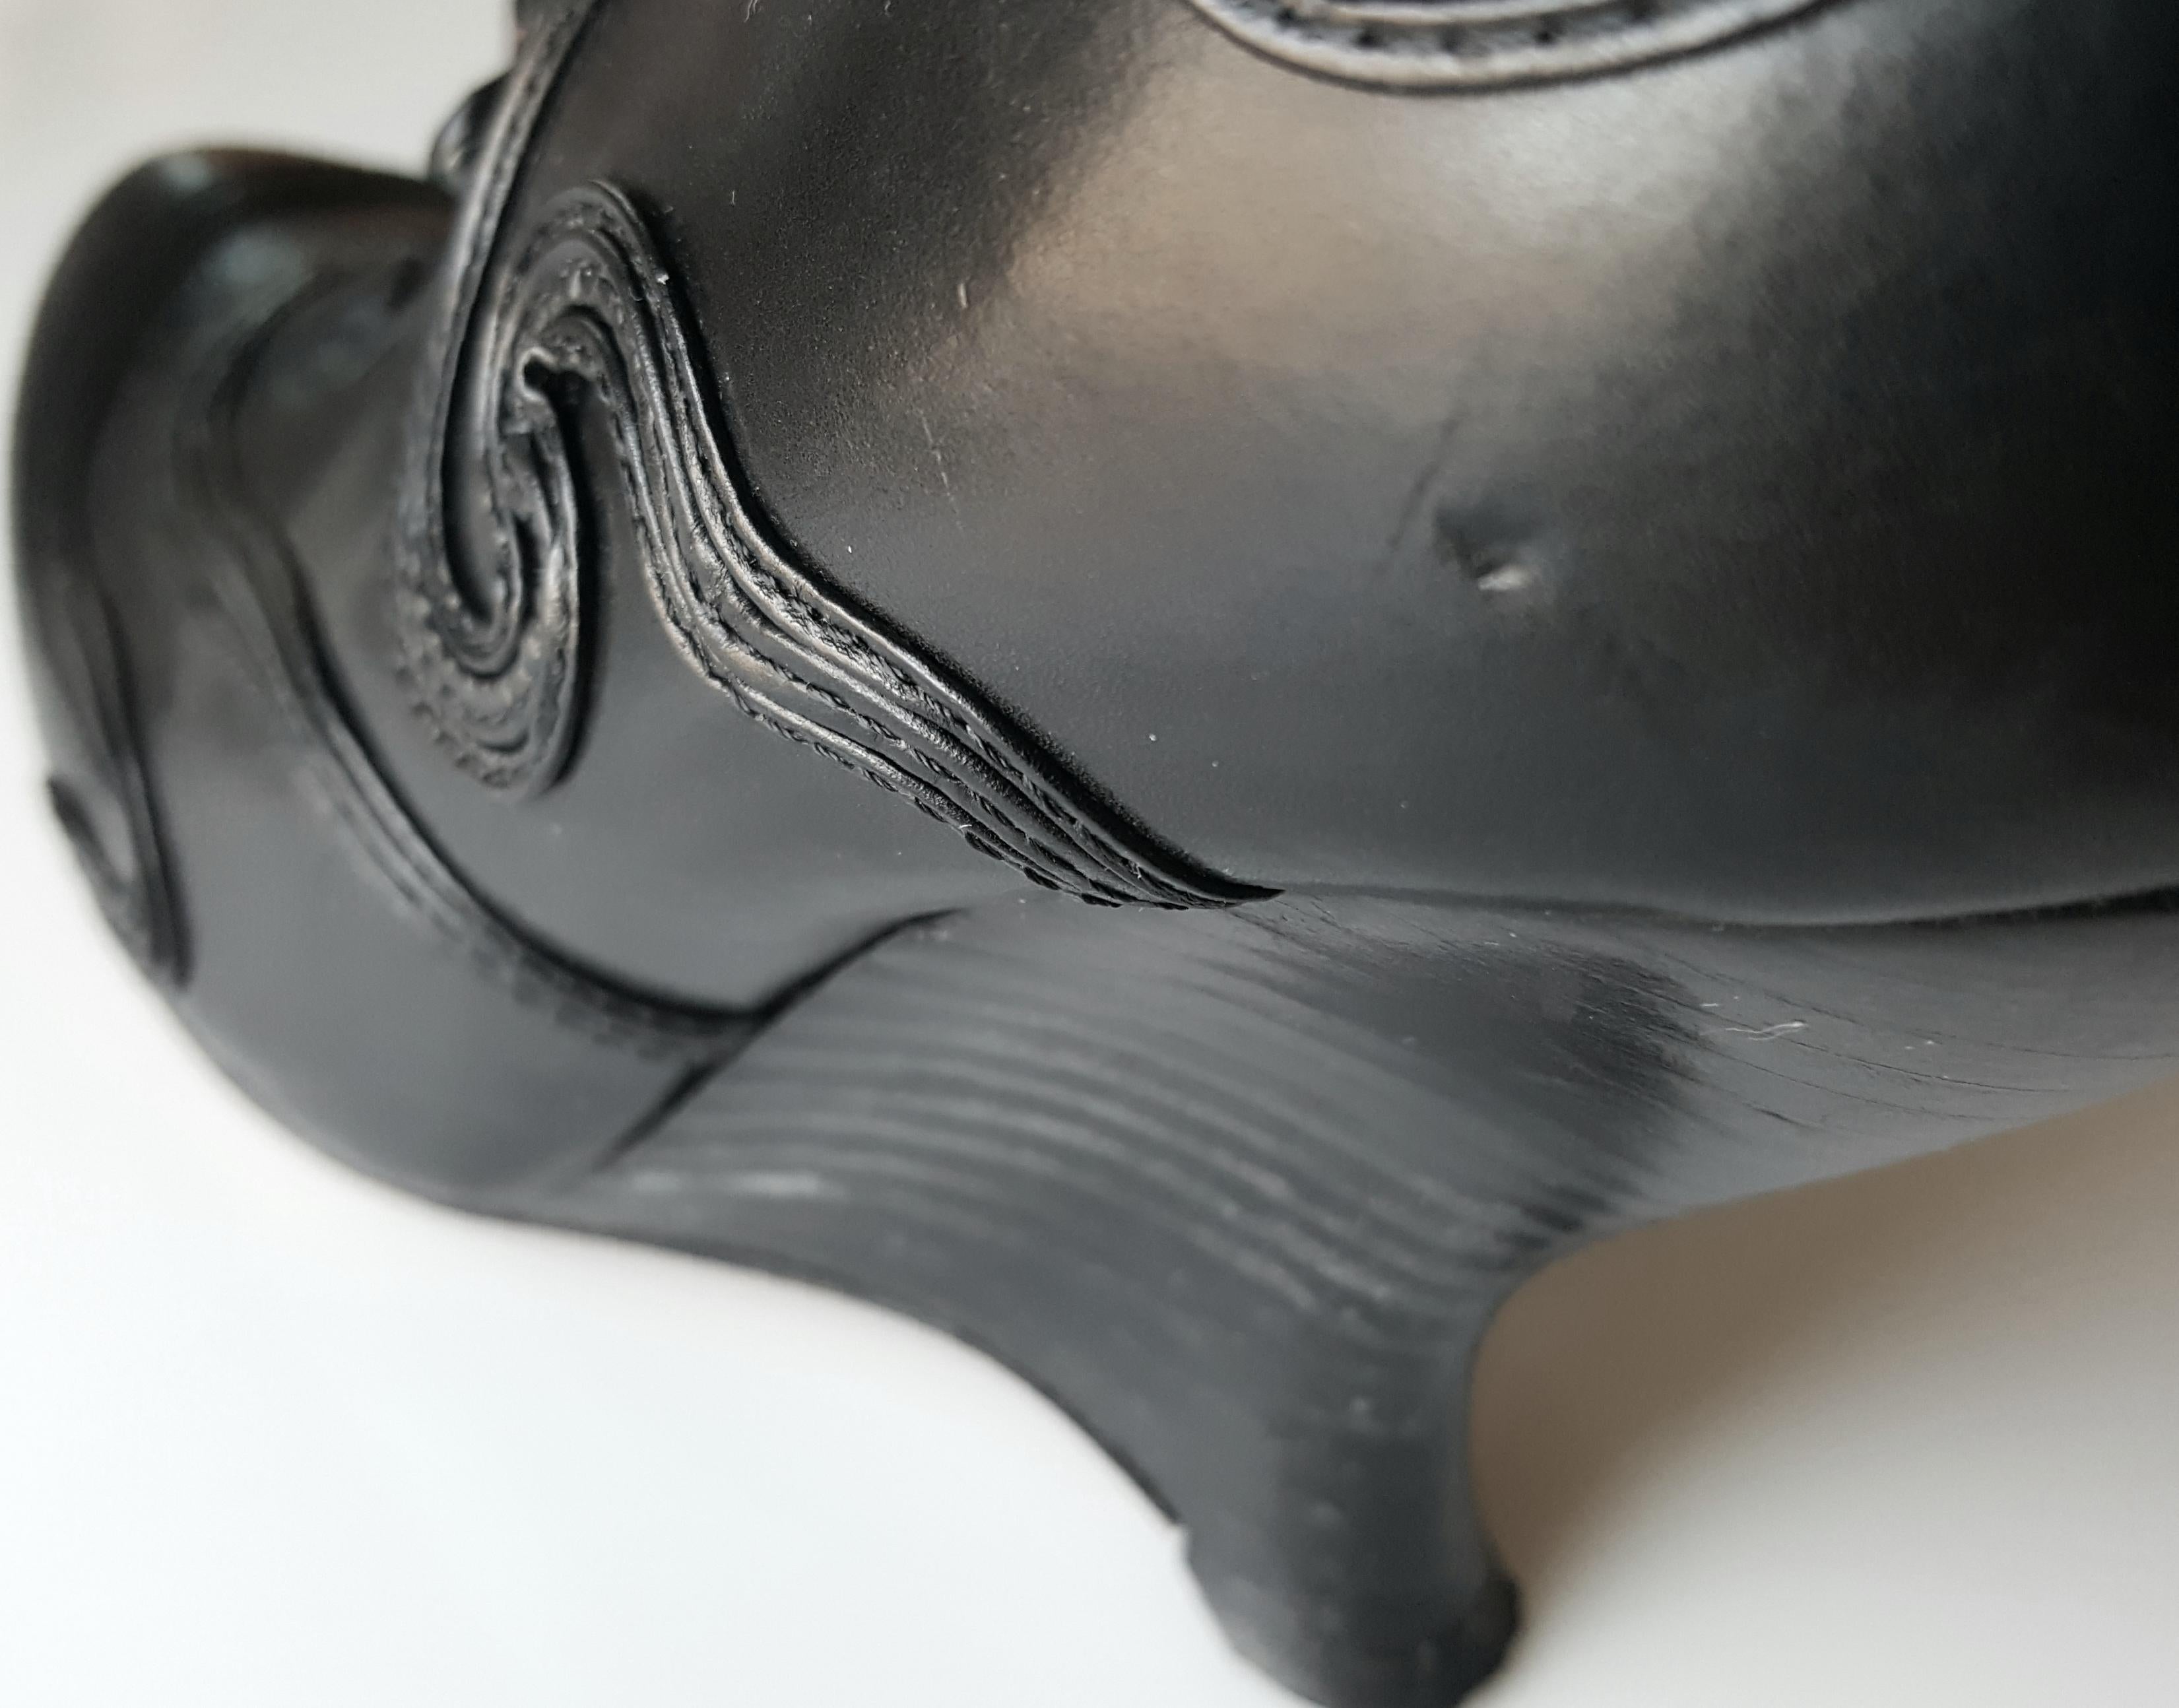 YvesSaintLaurent TomFord Finale Sculptural LotusHeel&Applique Black Ankle Boots 6